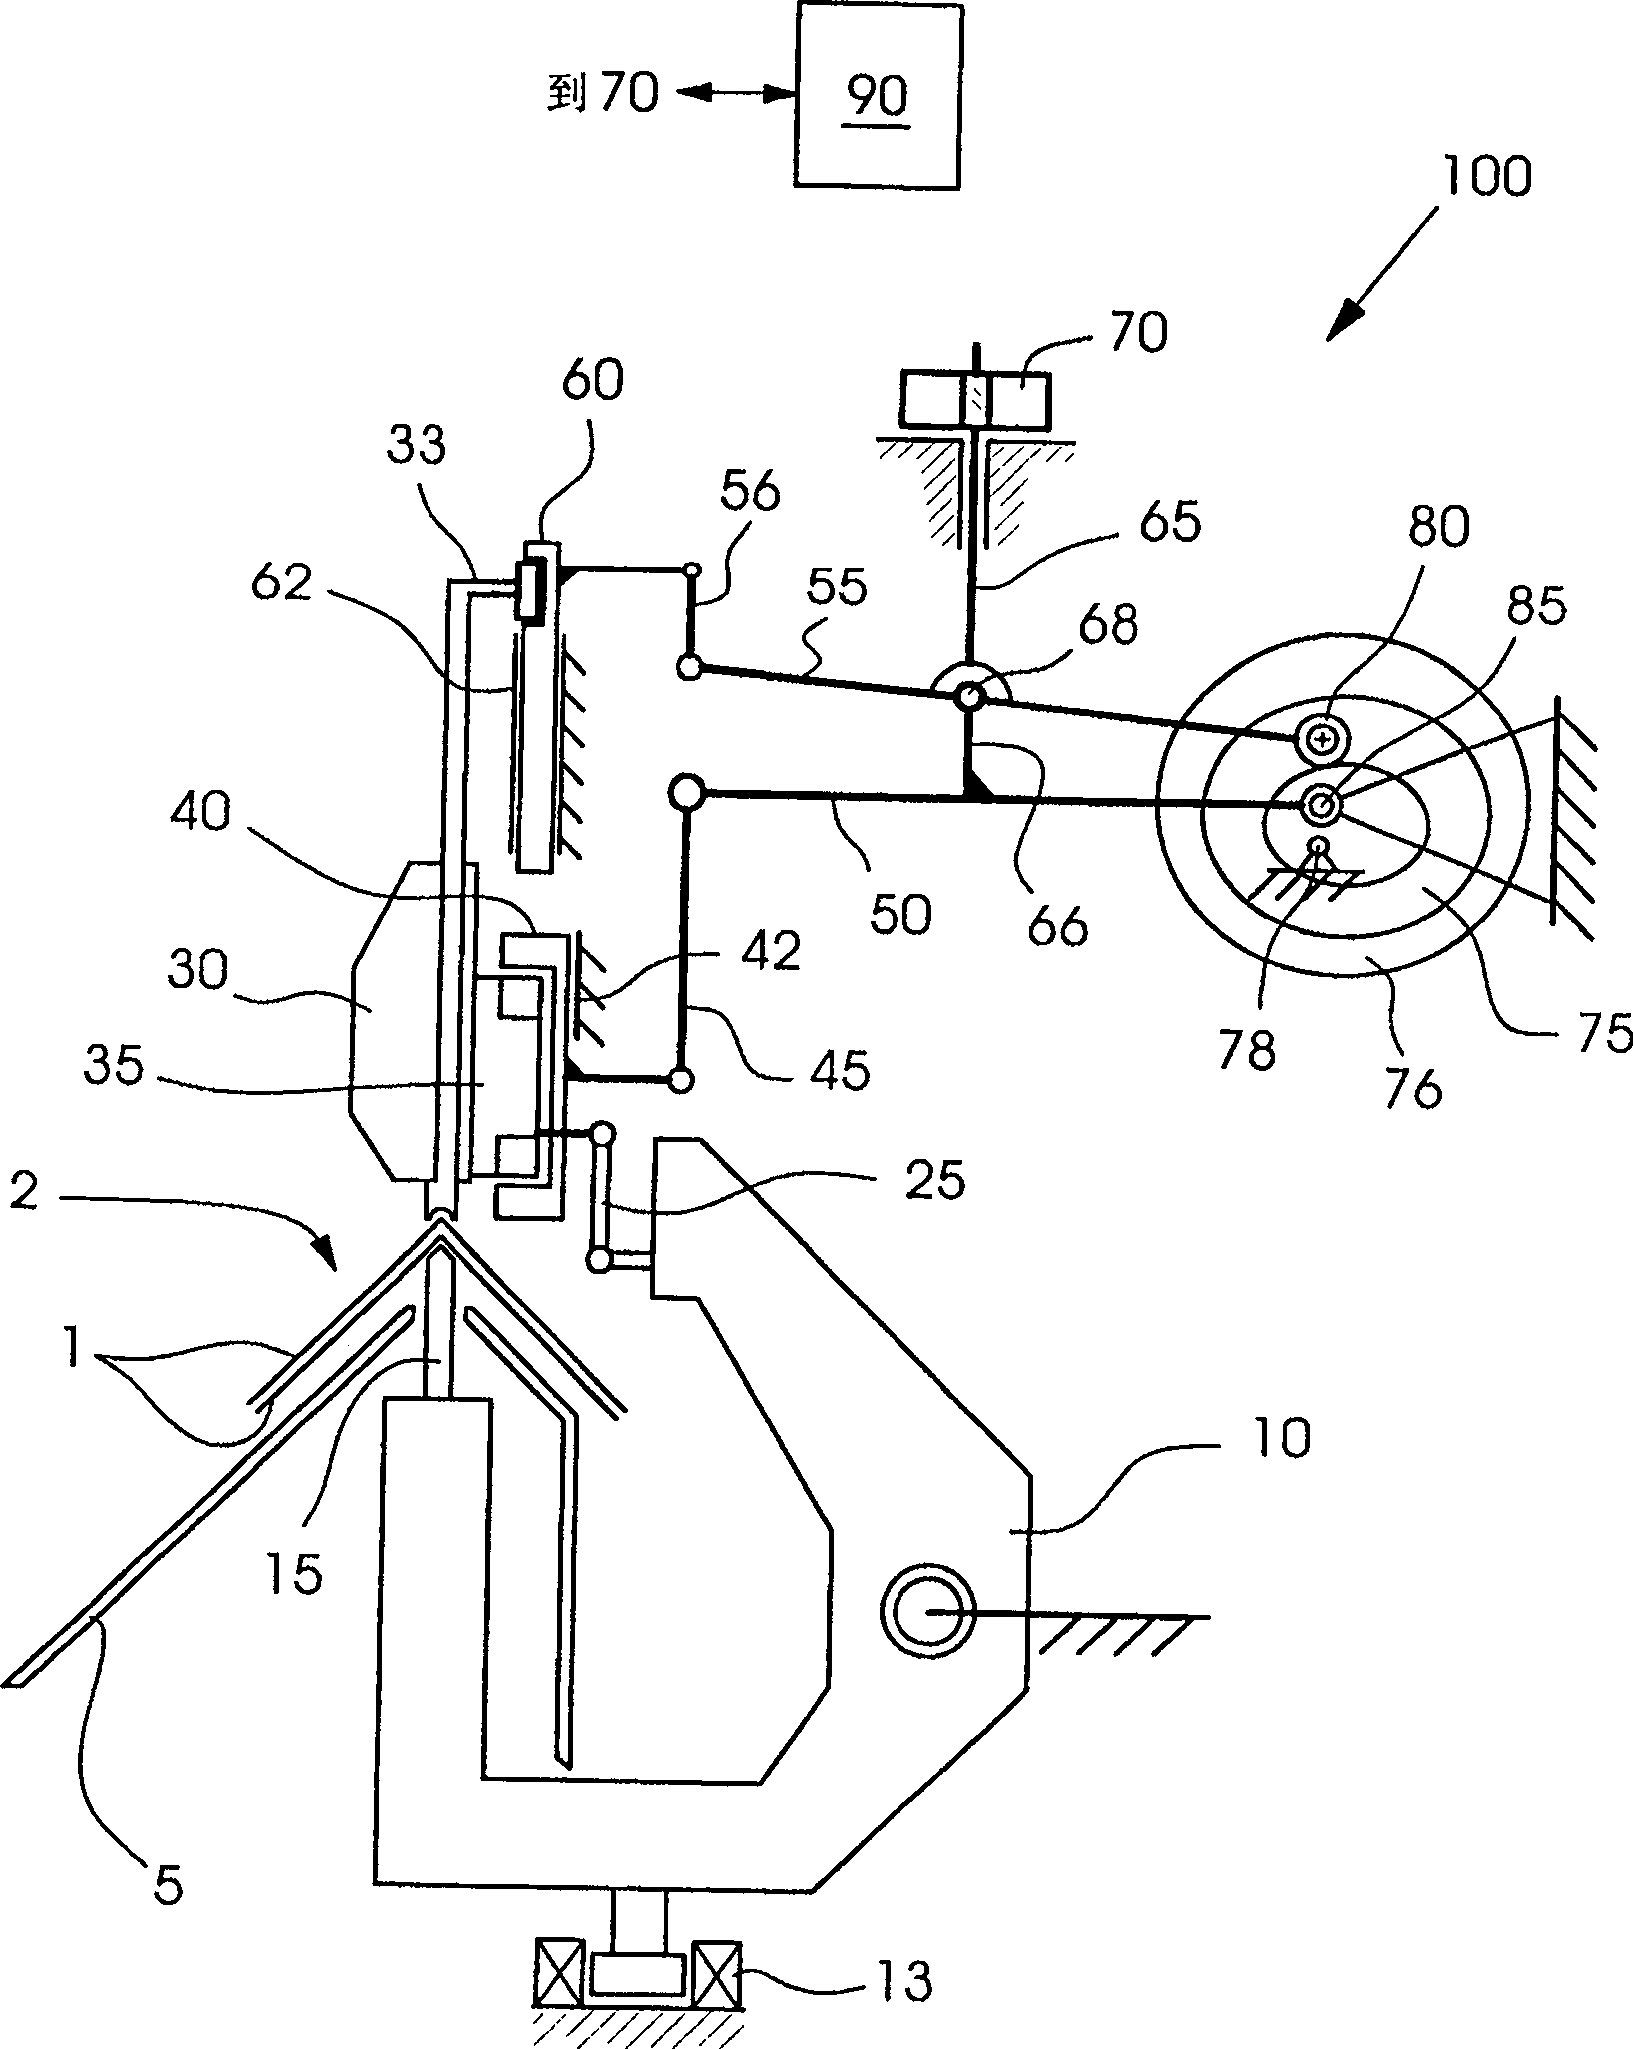 Stitching apparatus